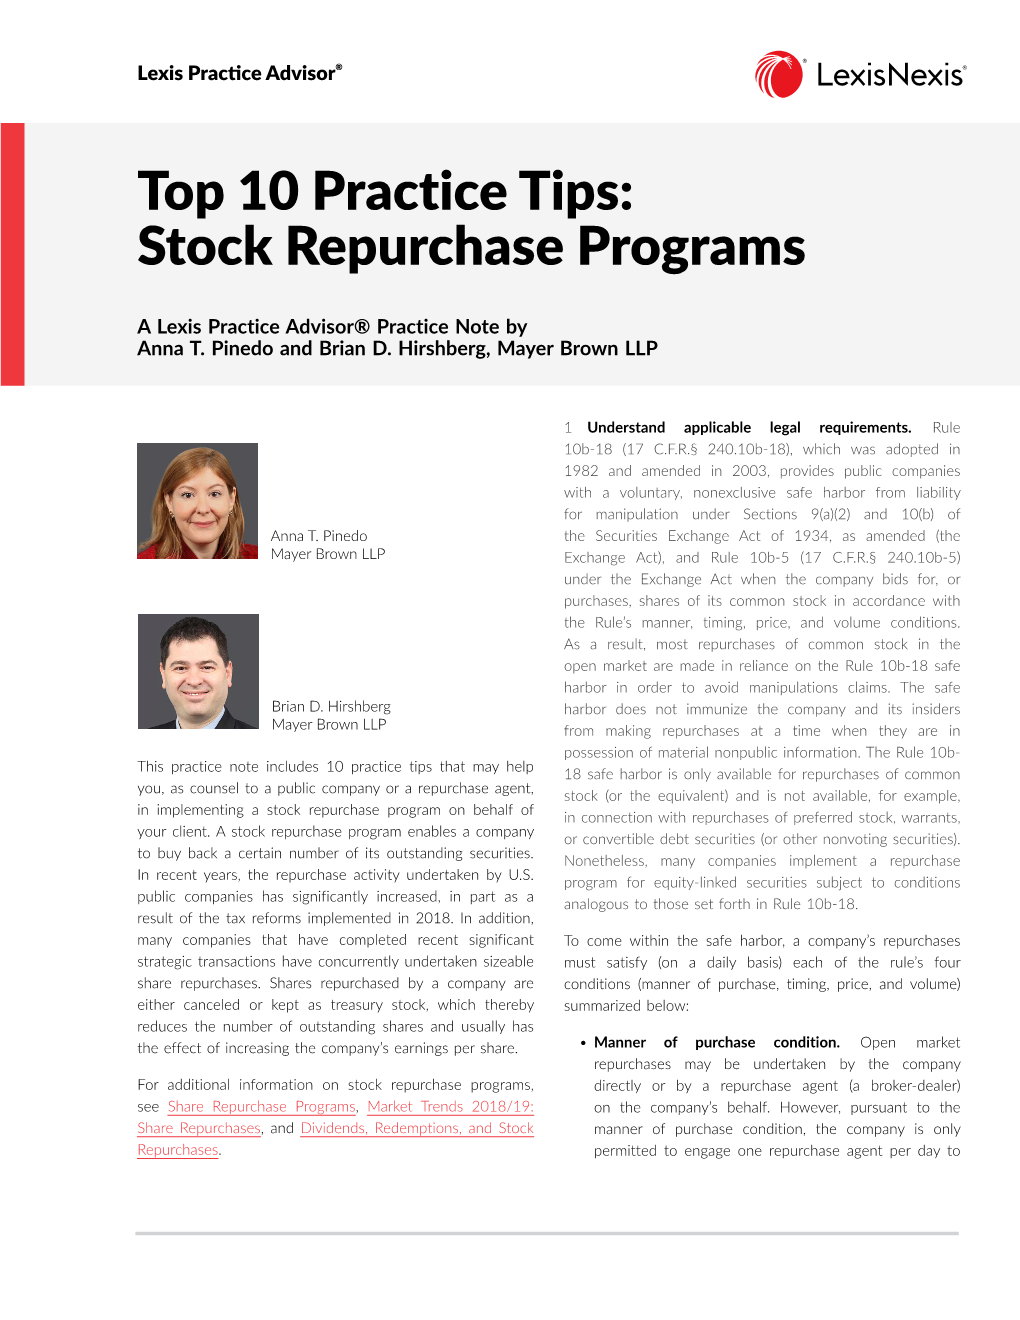 Top 10 Practice Tips: Stock Repurchase Programs